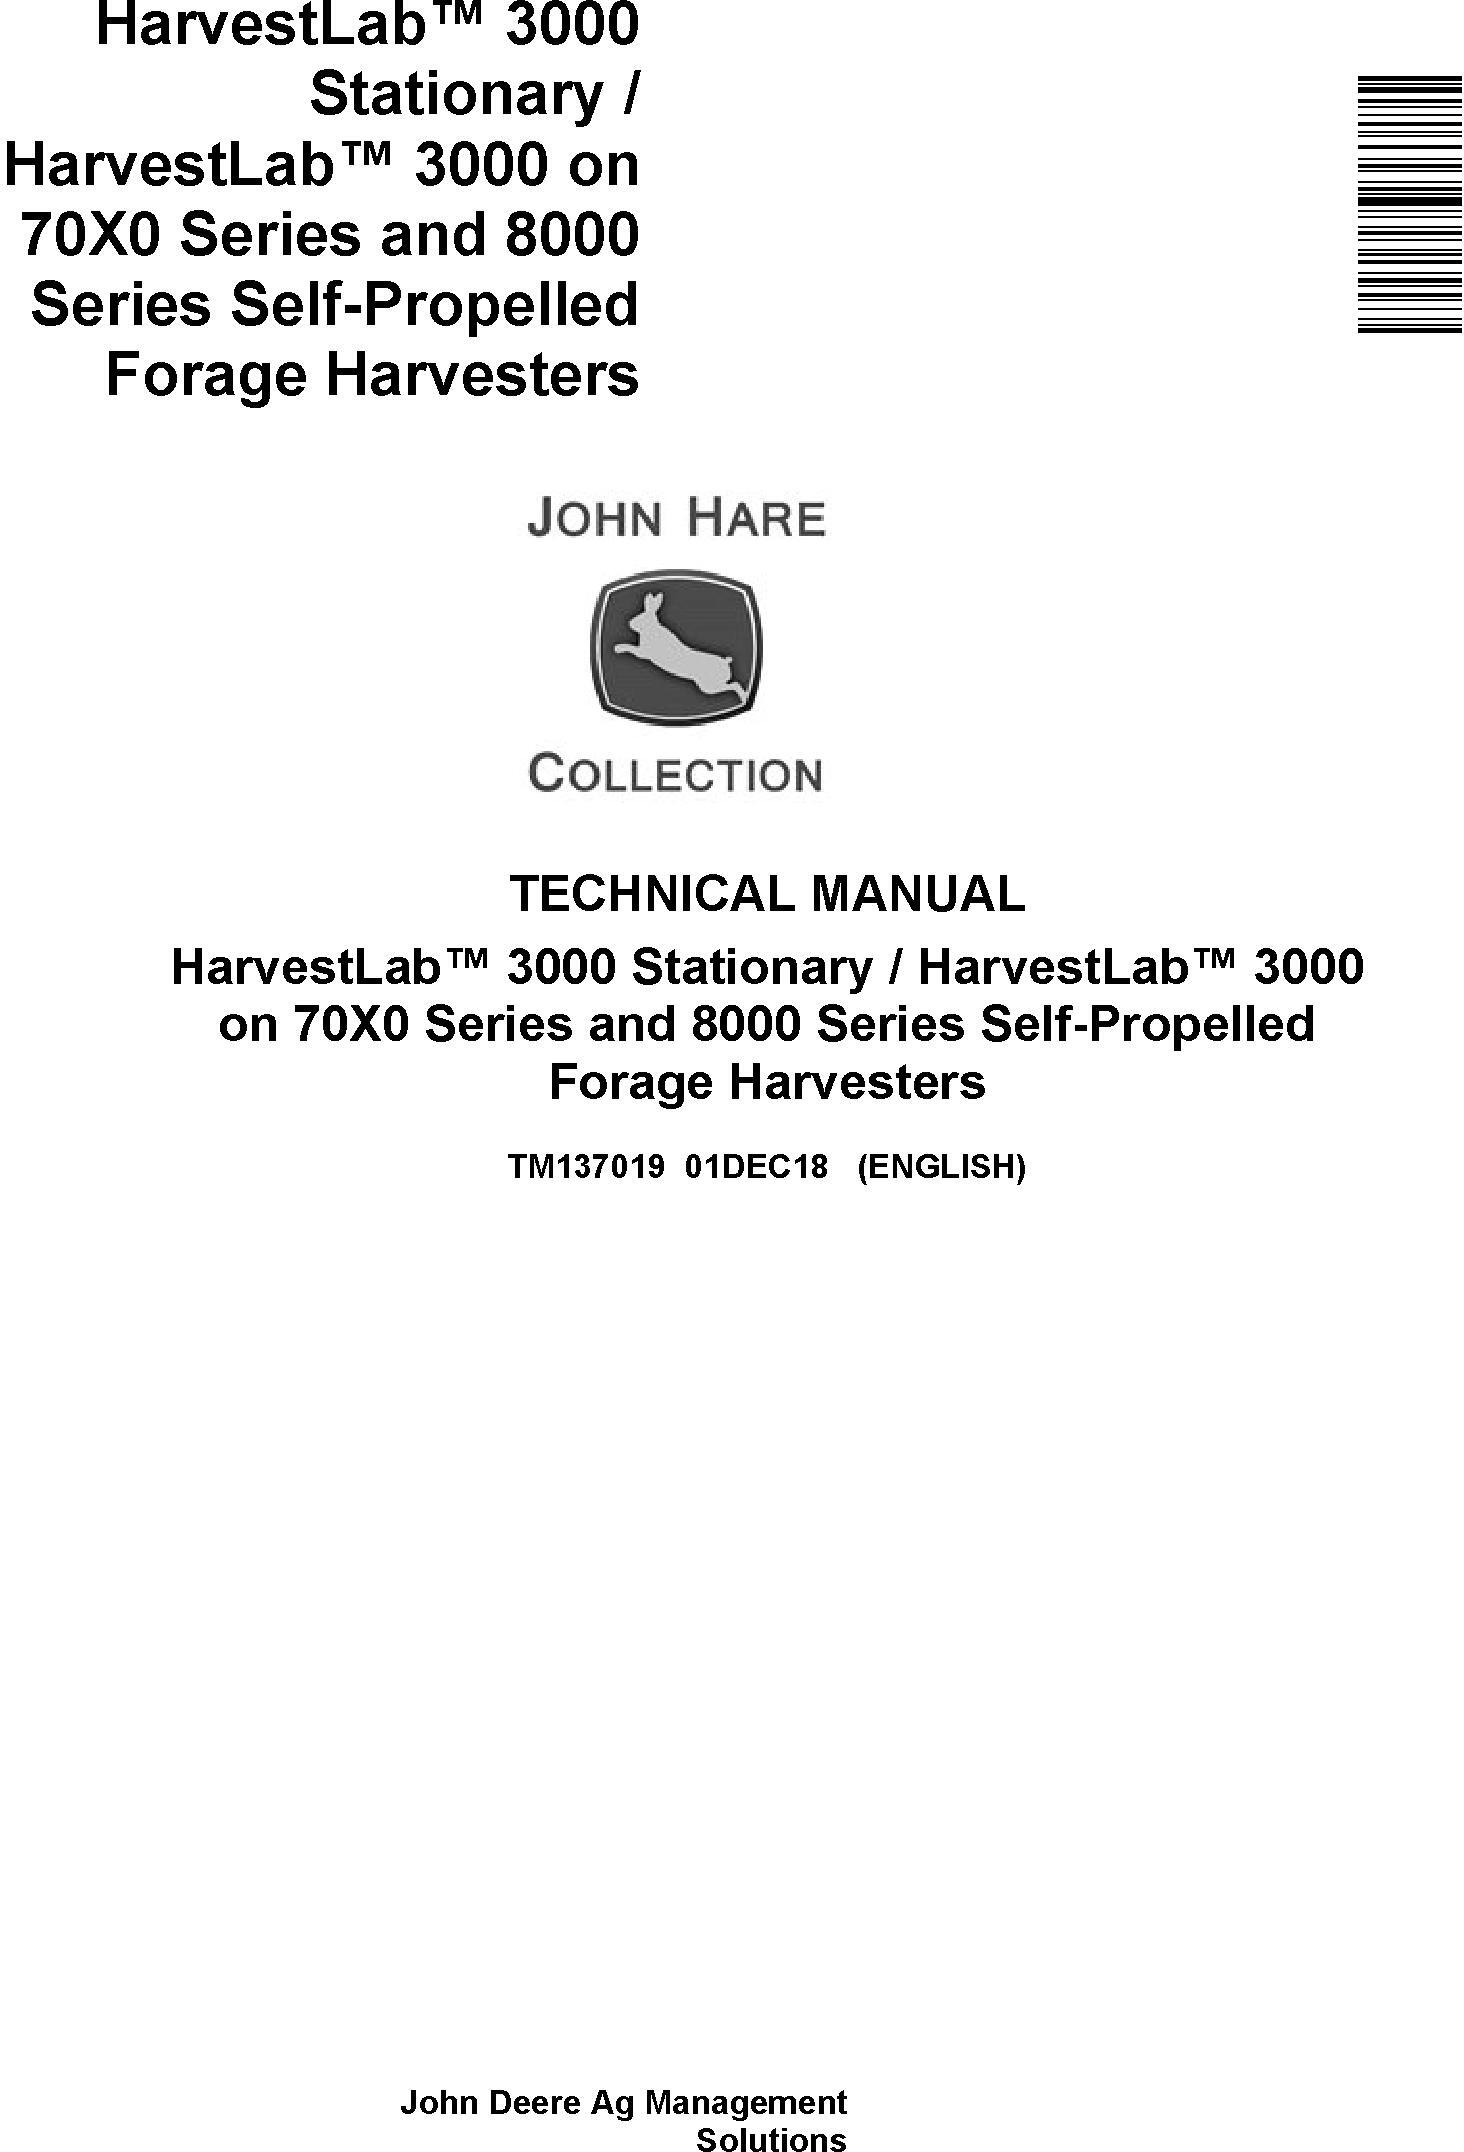 John Deere 3000 Stationary Forage Harvesters Technical Manual TM137019